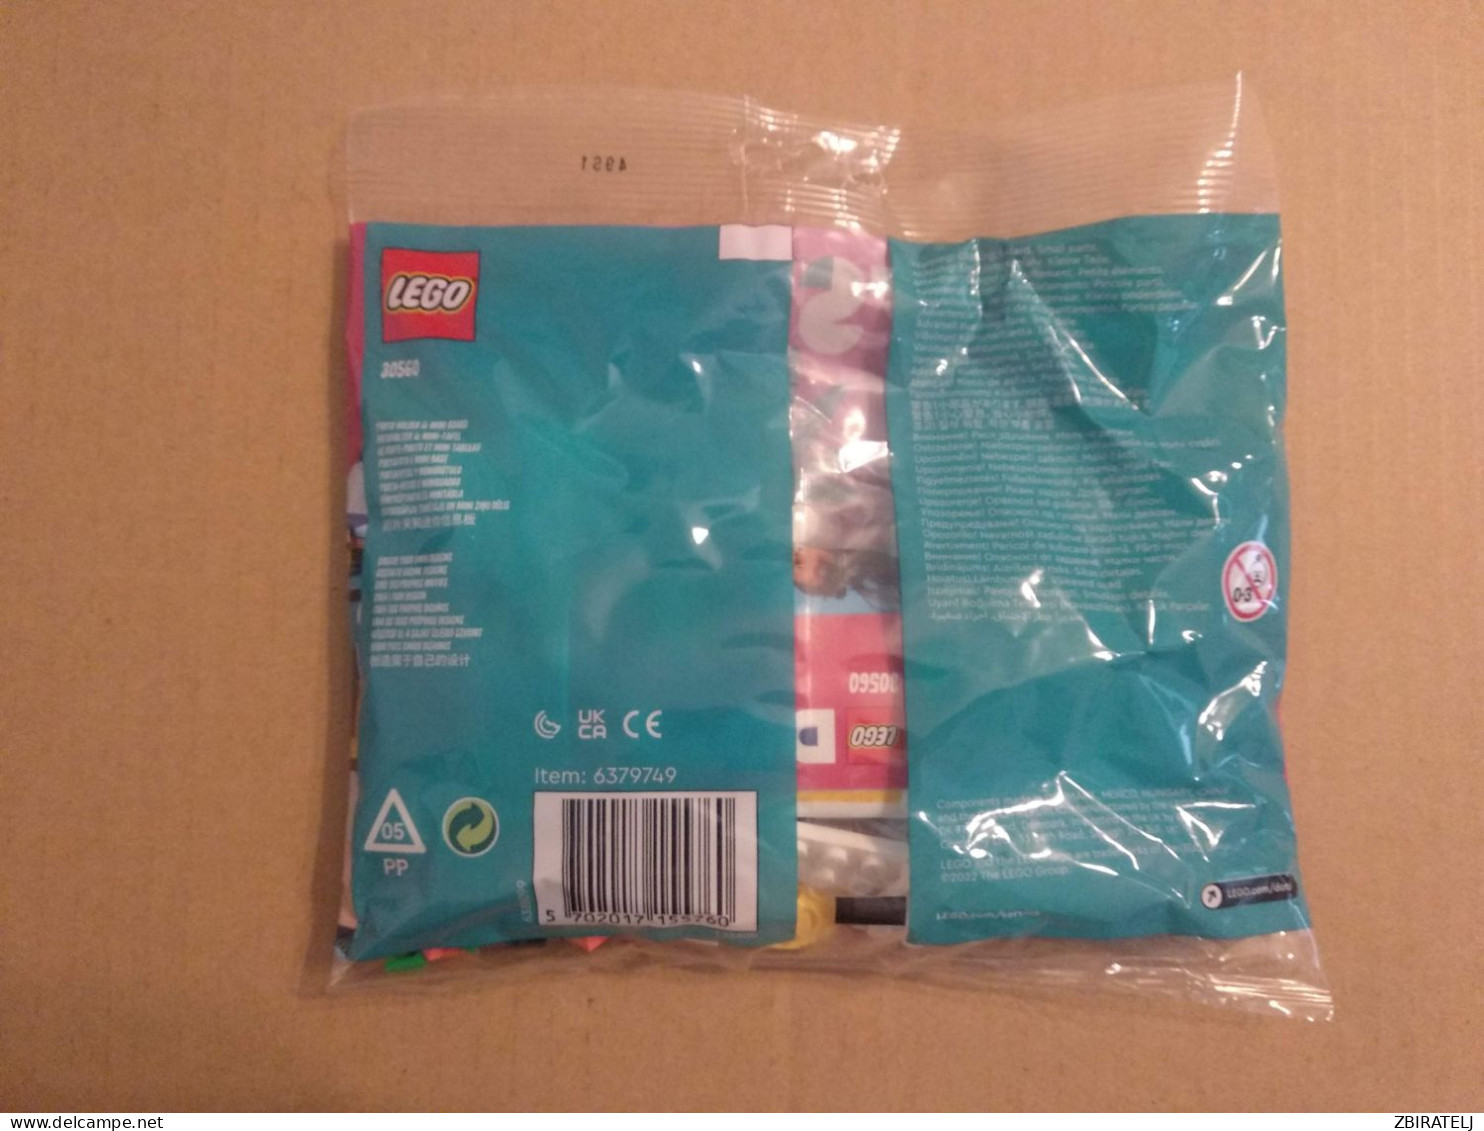 LEGO Dots 30560 Ananas Photo Holder & Mini Board Brand New Sealed Set Polybag - Loten